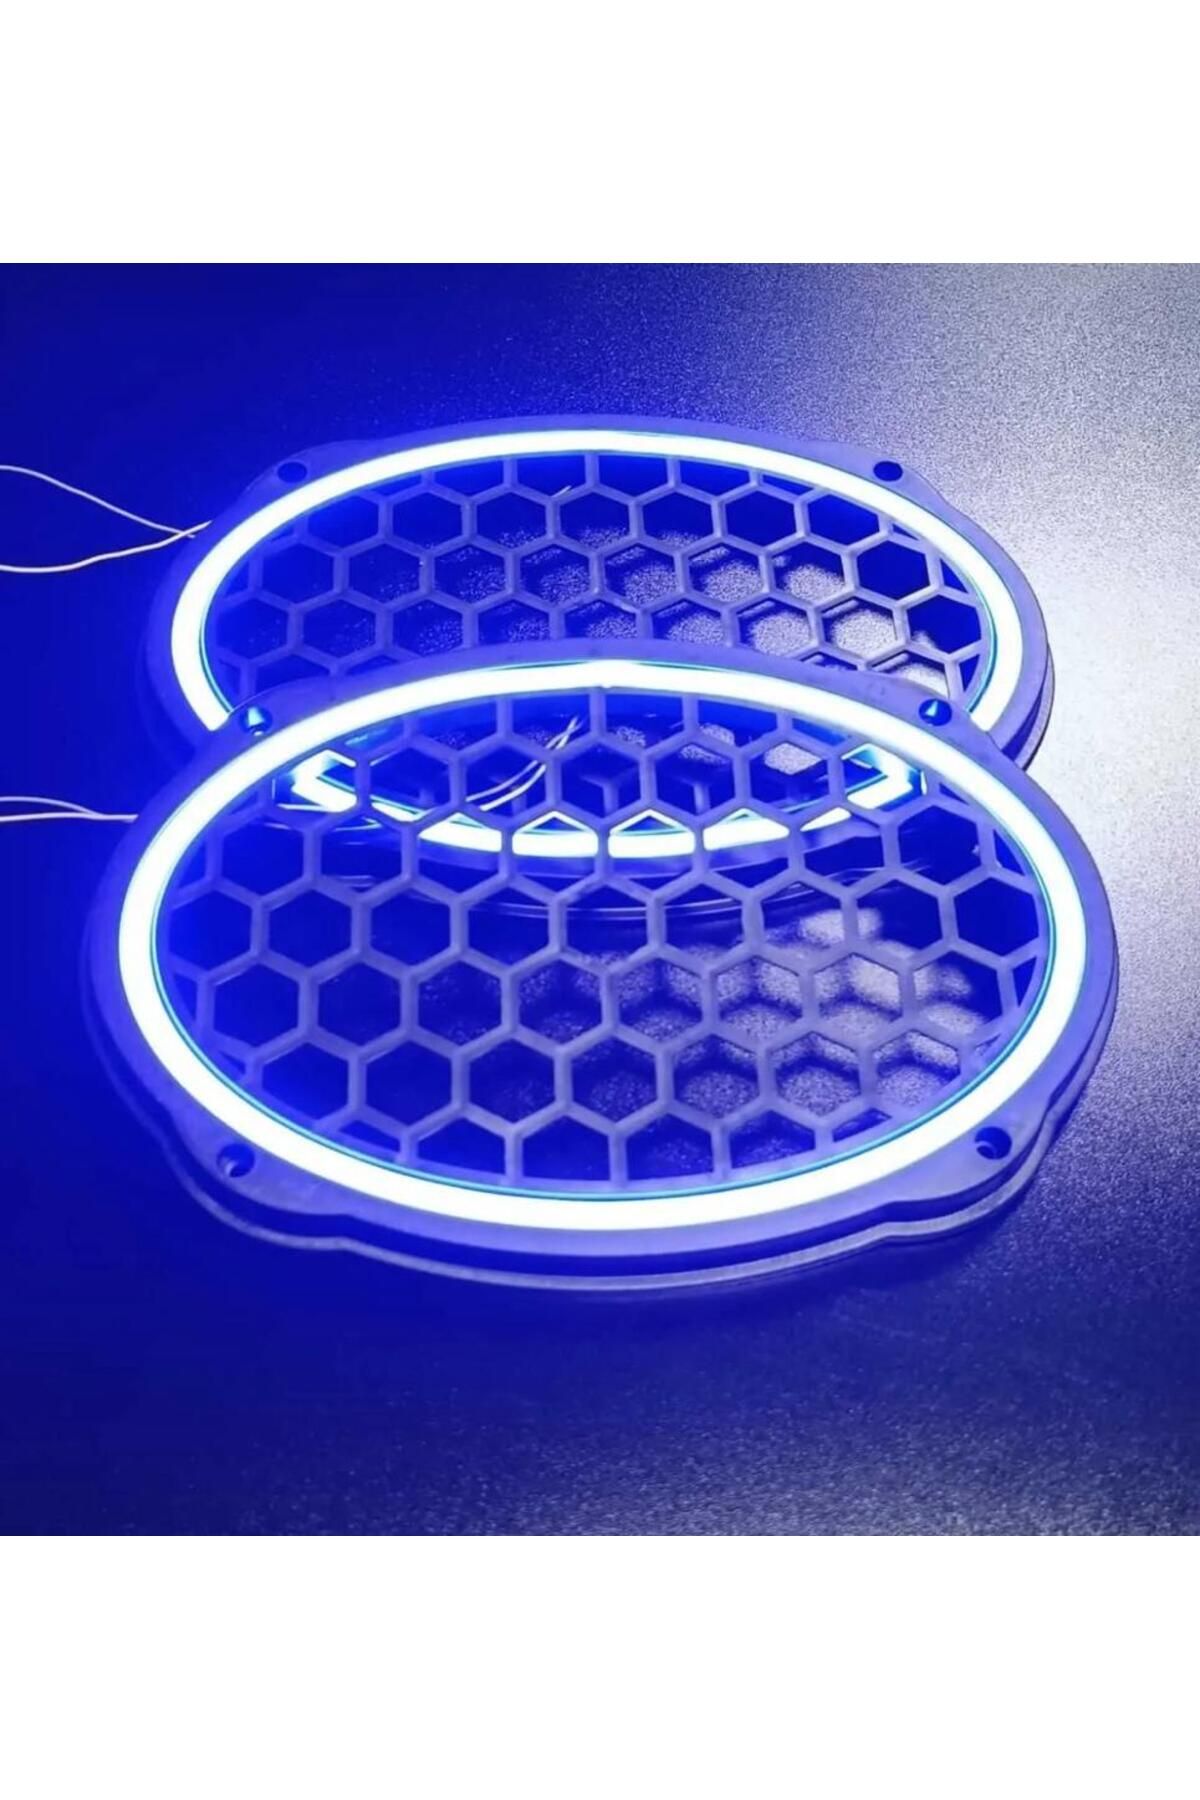 Manessa Oval 6x9 Hoparlör Kapağı Plastik Neon MaviI ışıklı Vidalanabilir